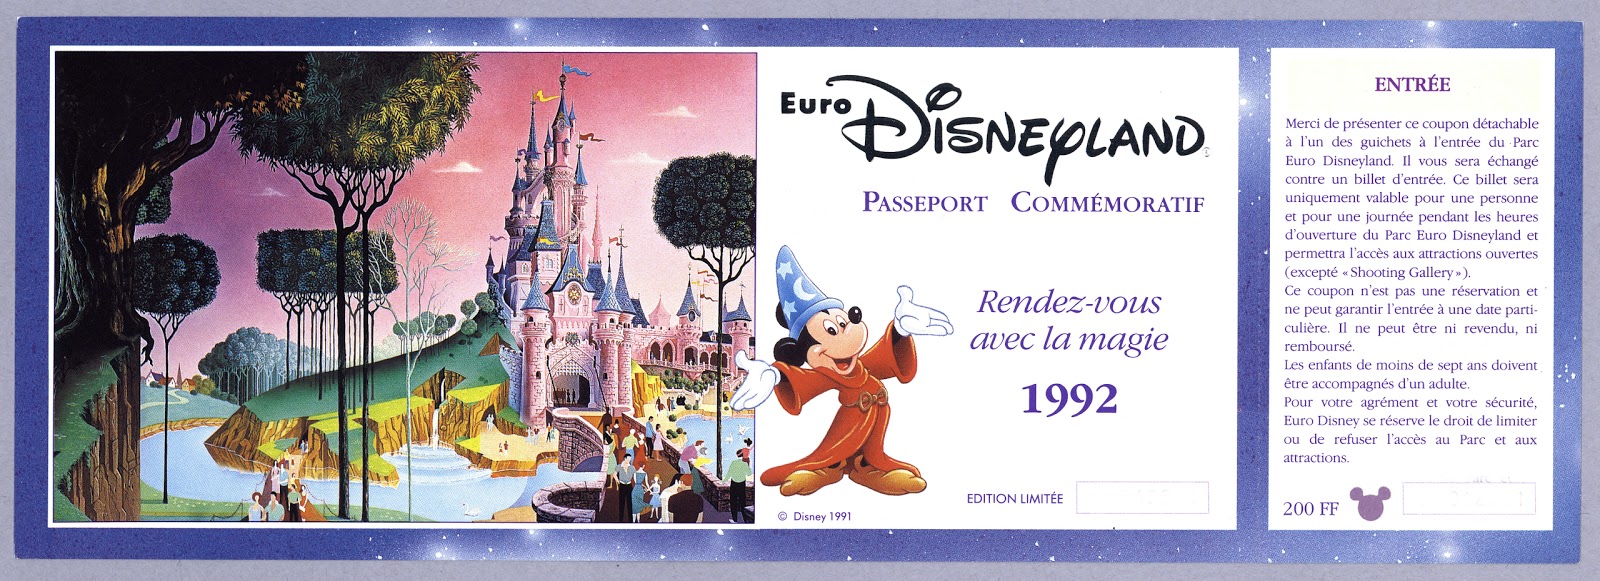 Vintage Disneyland Tickets: Euro Disneyland Commemorative Passport